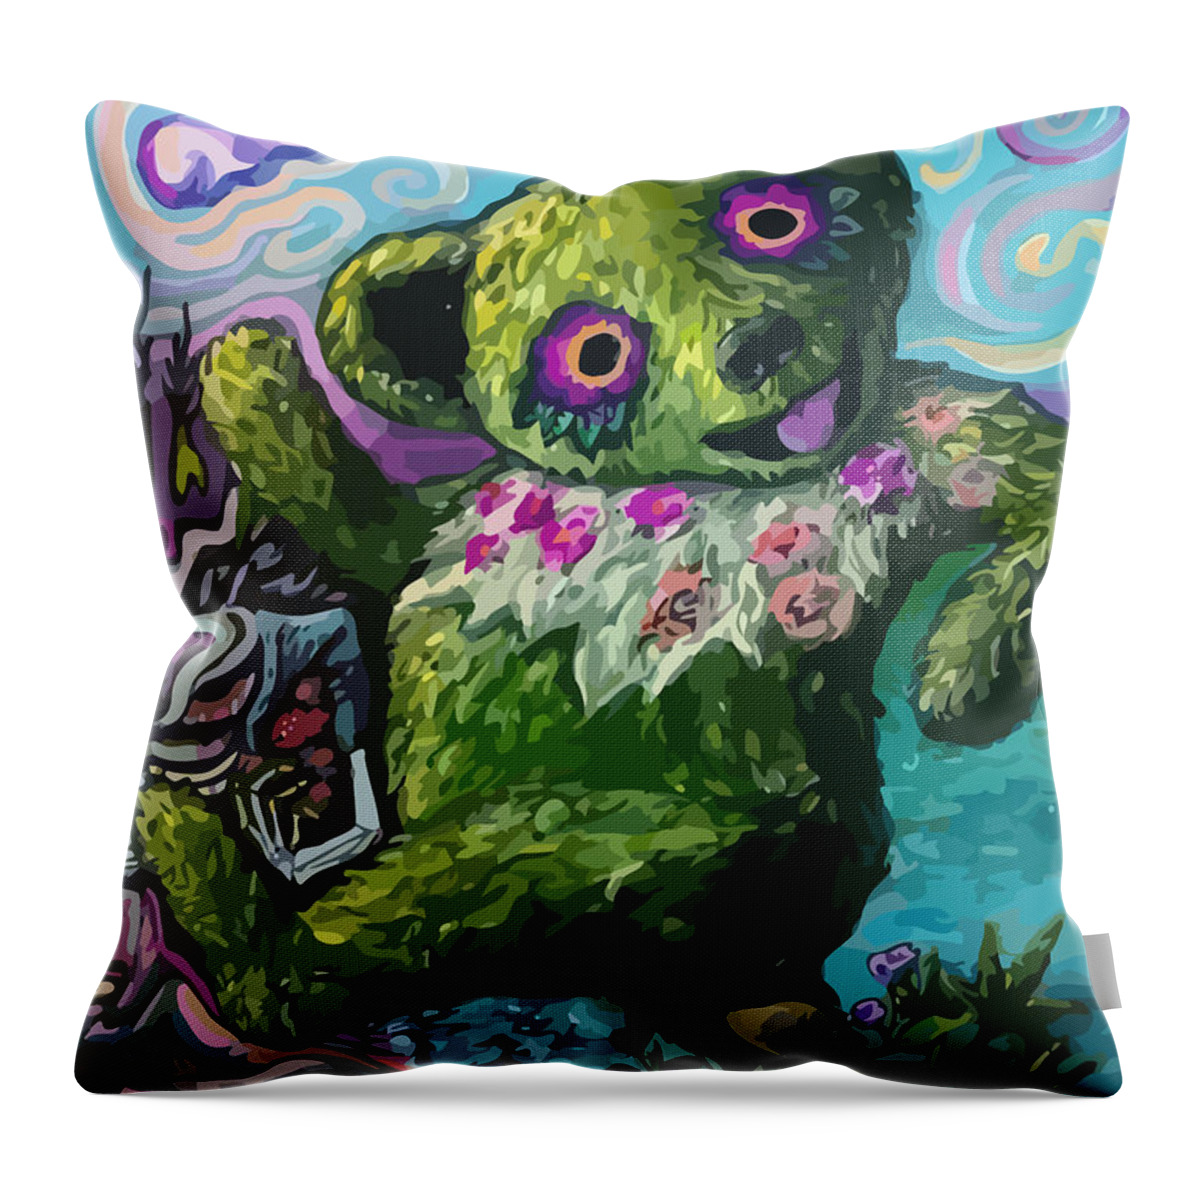 Grateful Dead Throw Pillow featuring the digital art The Tripy Bear by The Bear